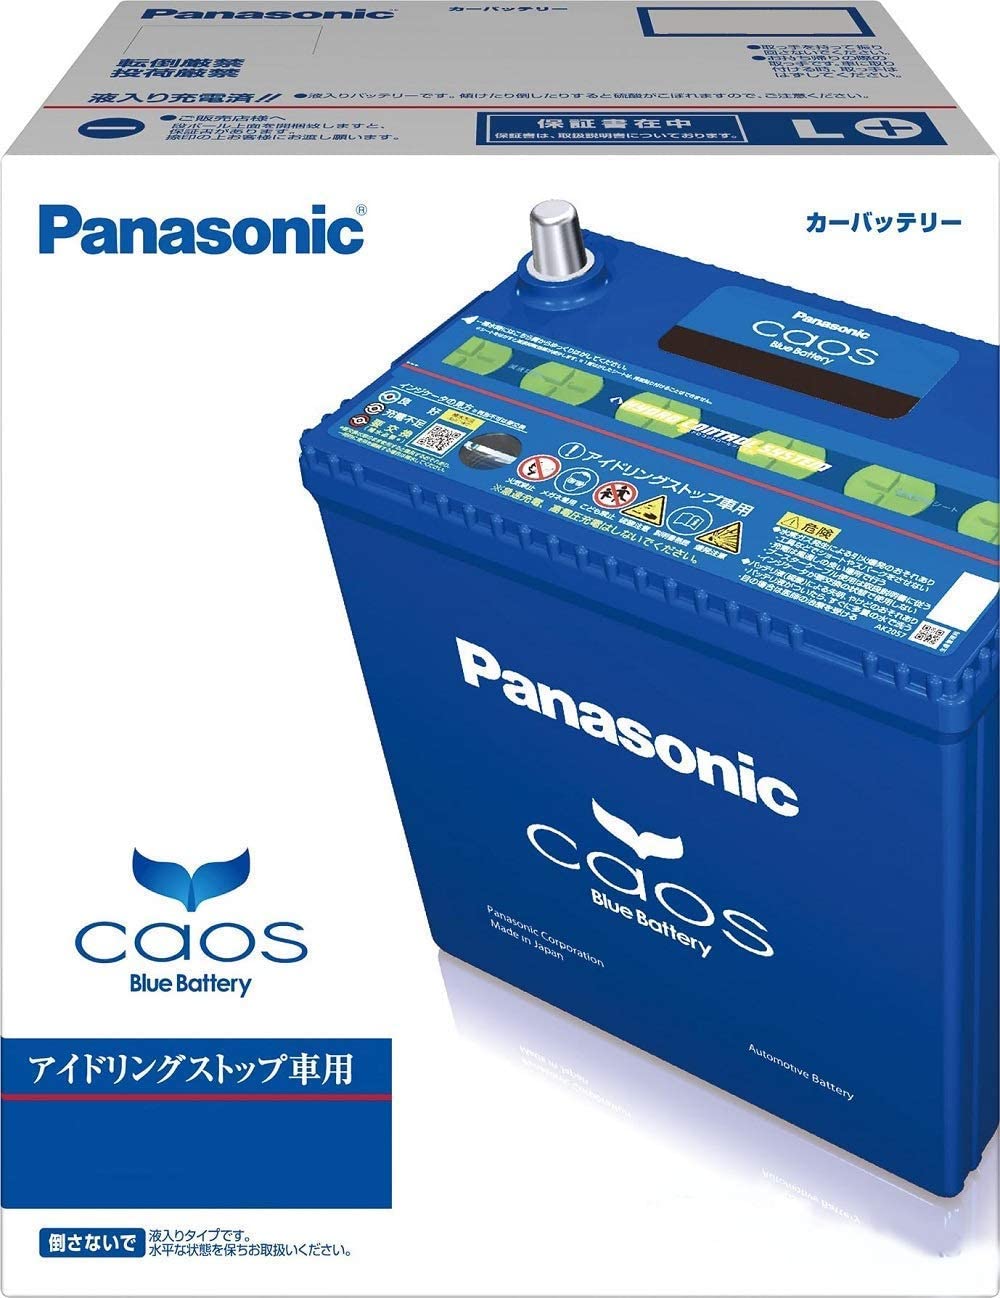 Panasonic パナソニック 国産車バッテリー カオス アイドリングストップ車用 N T115 A3 N T115 A3 お宝ワールド